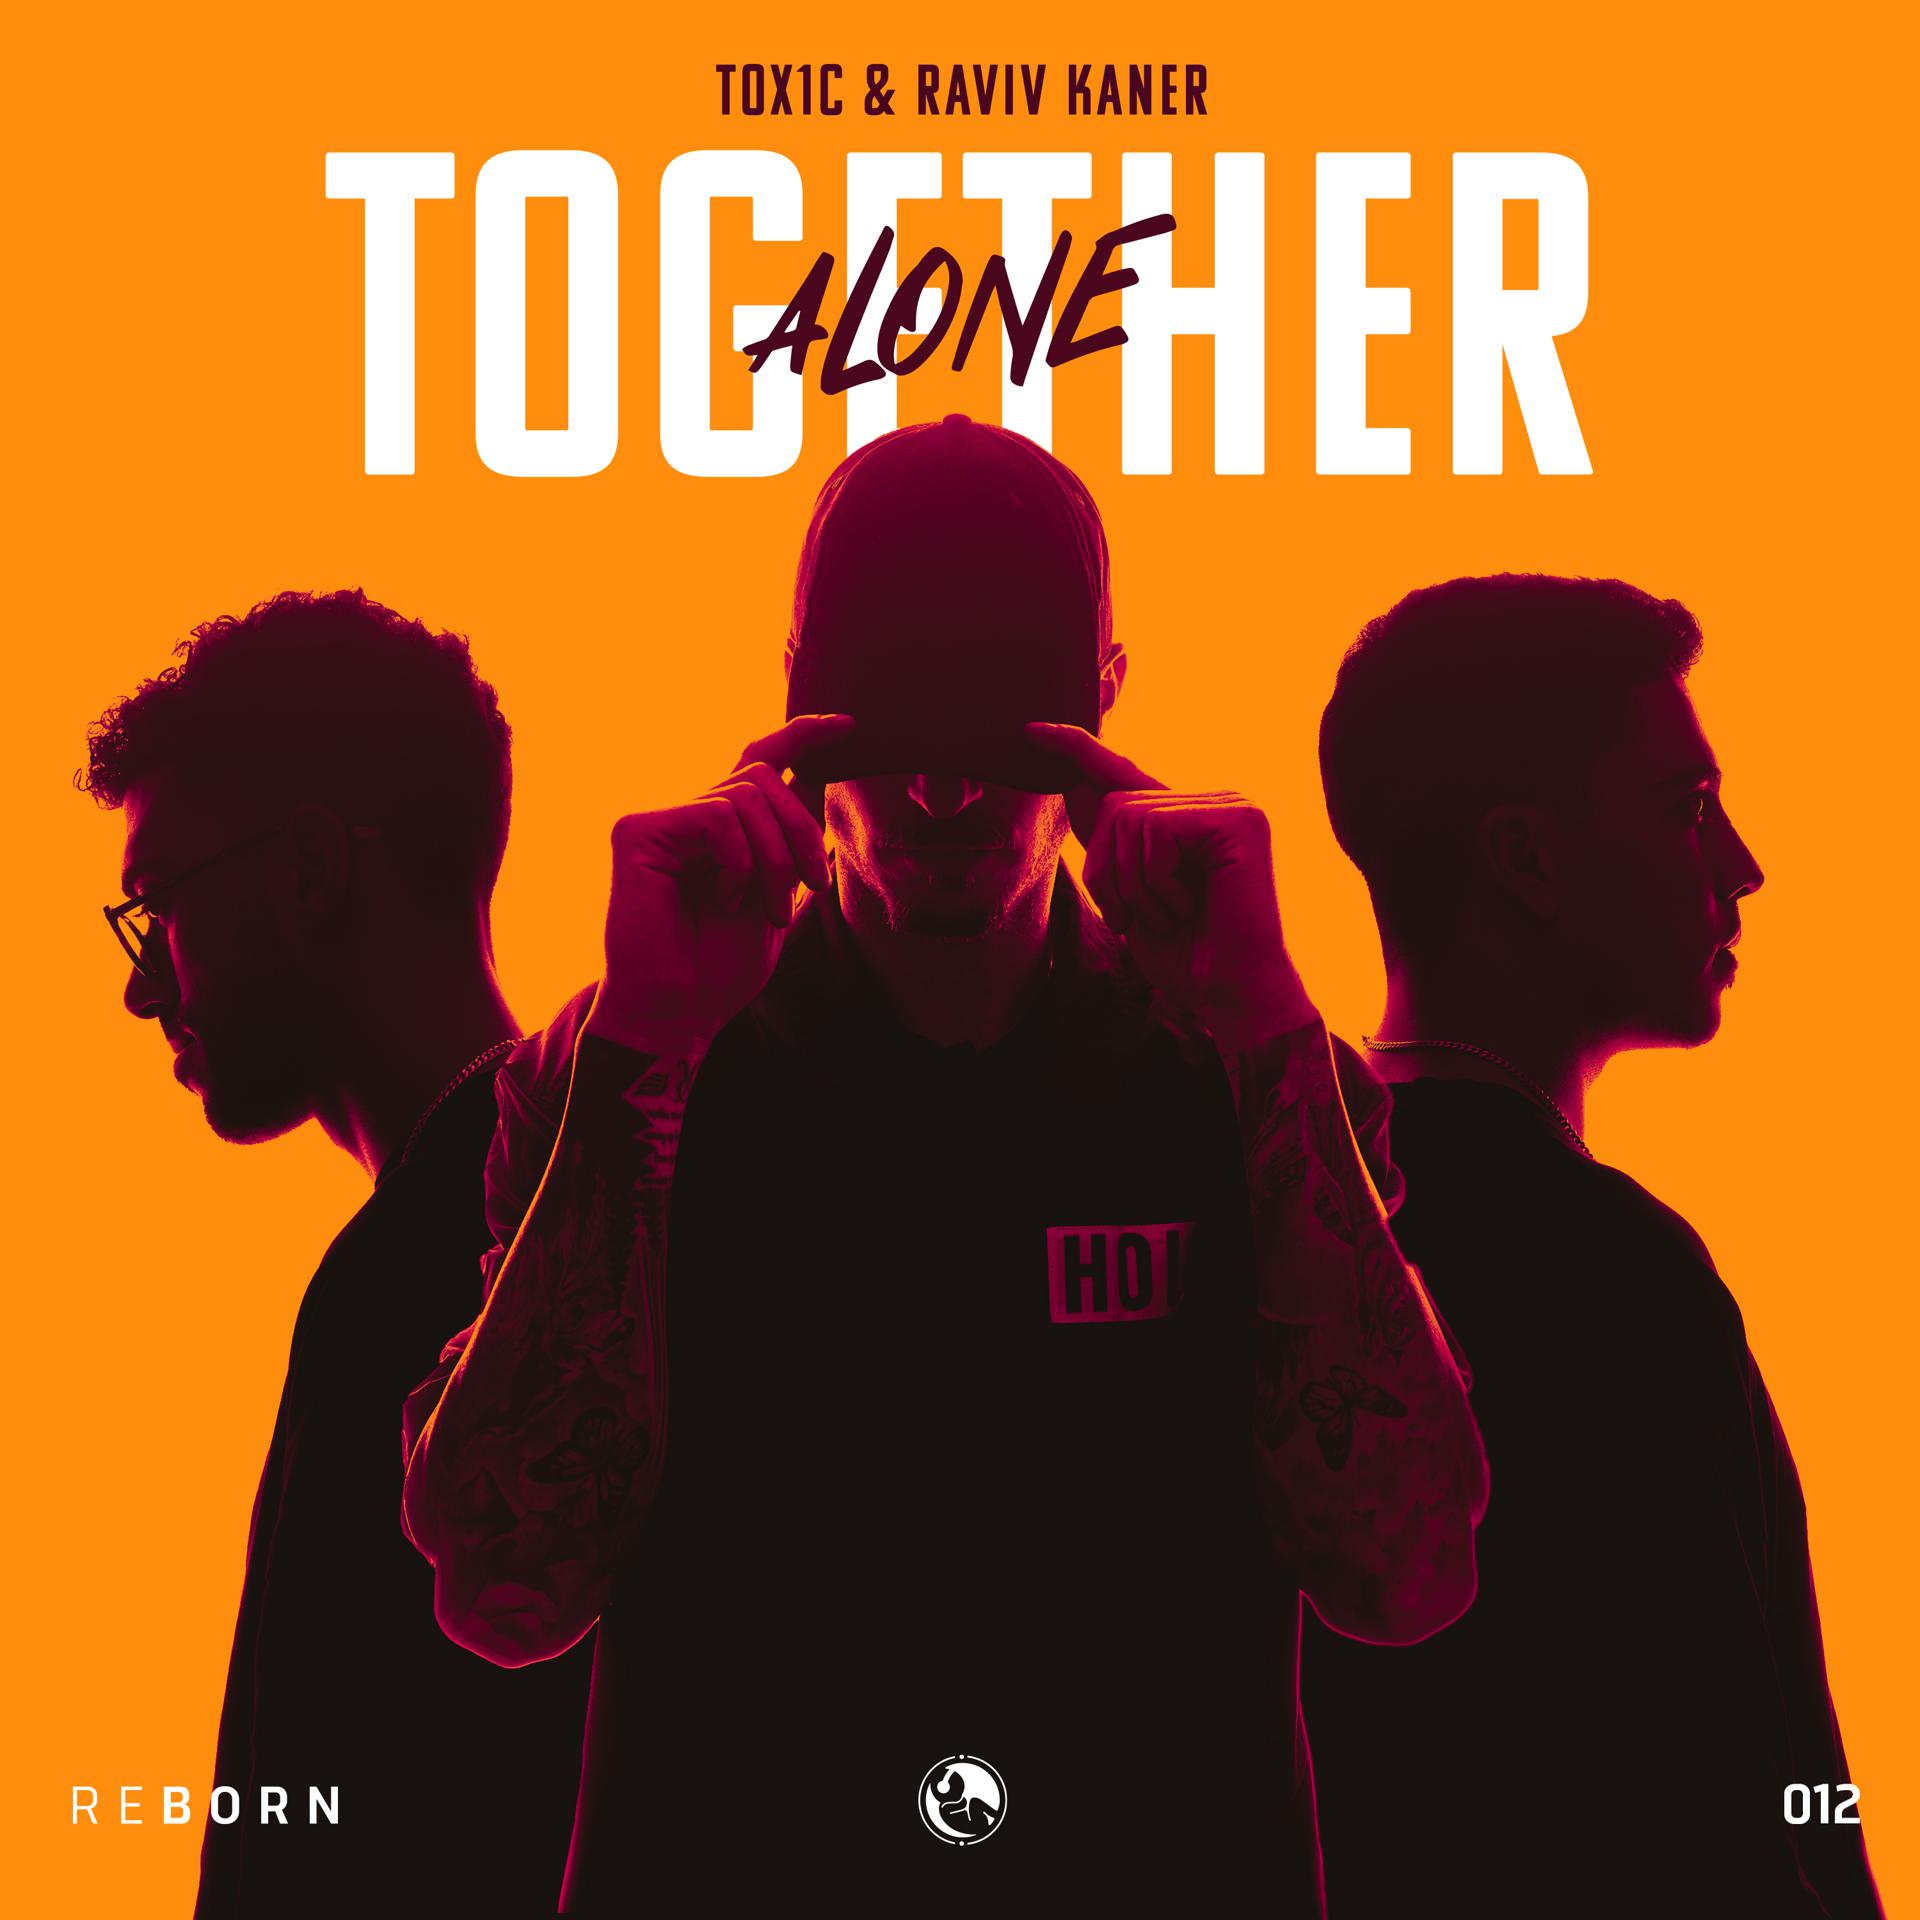 Постер альбома Together Alone